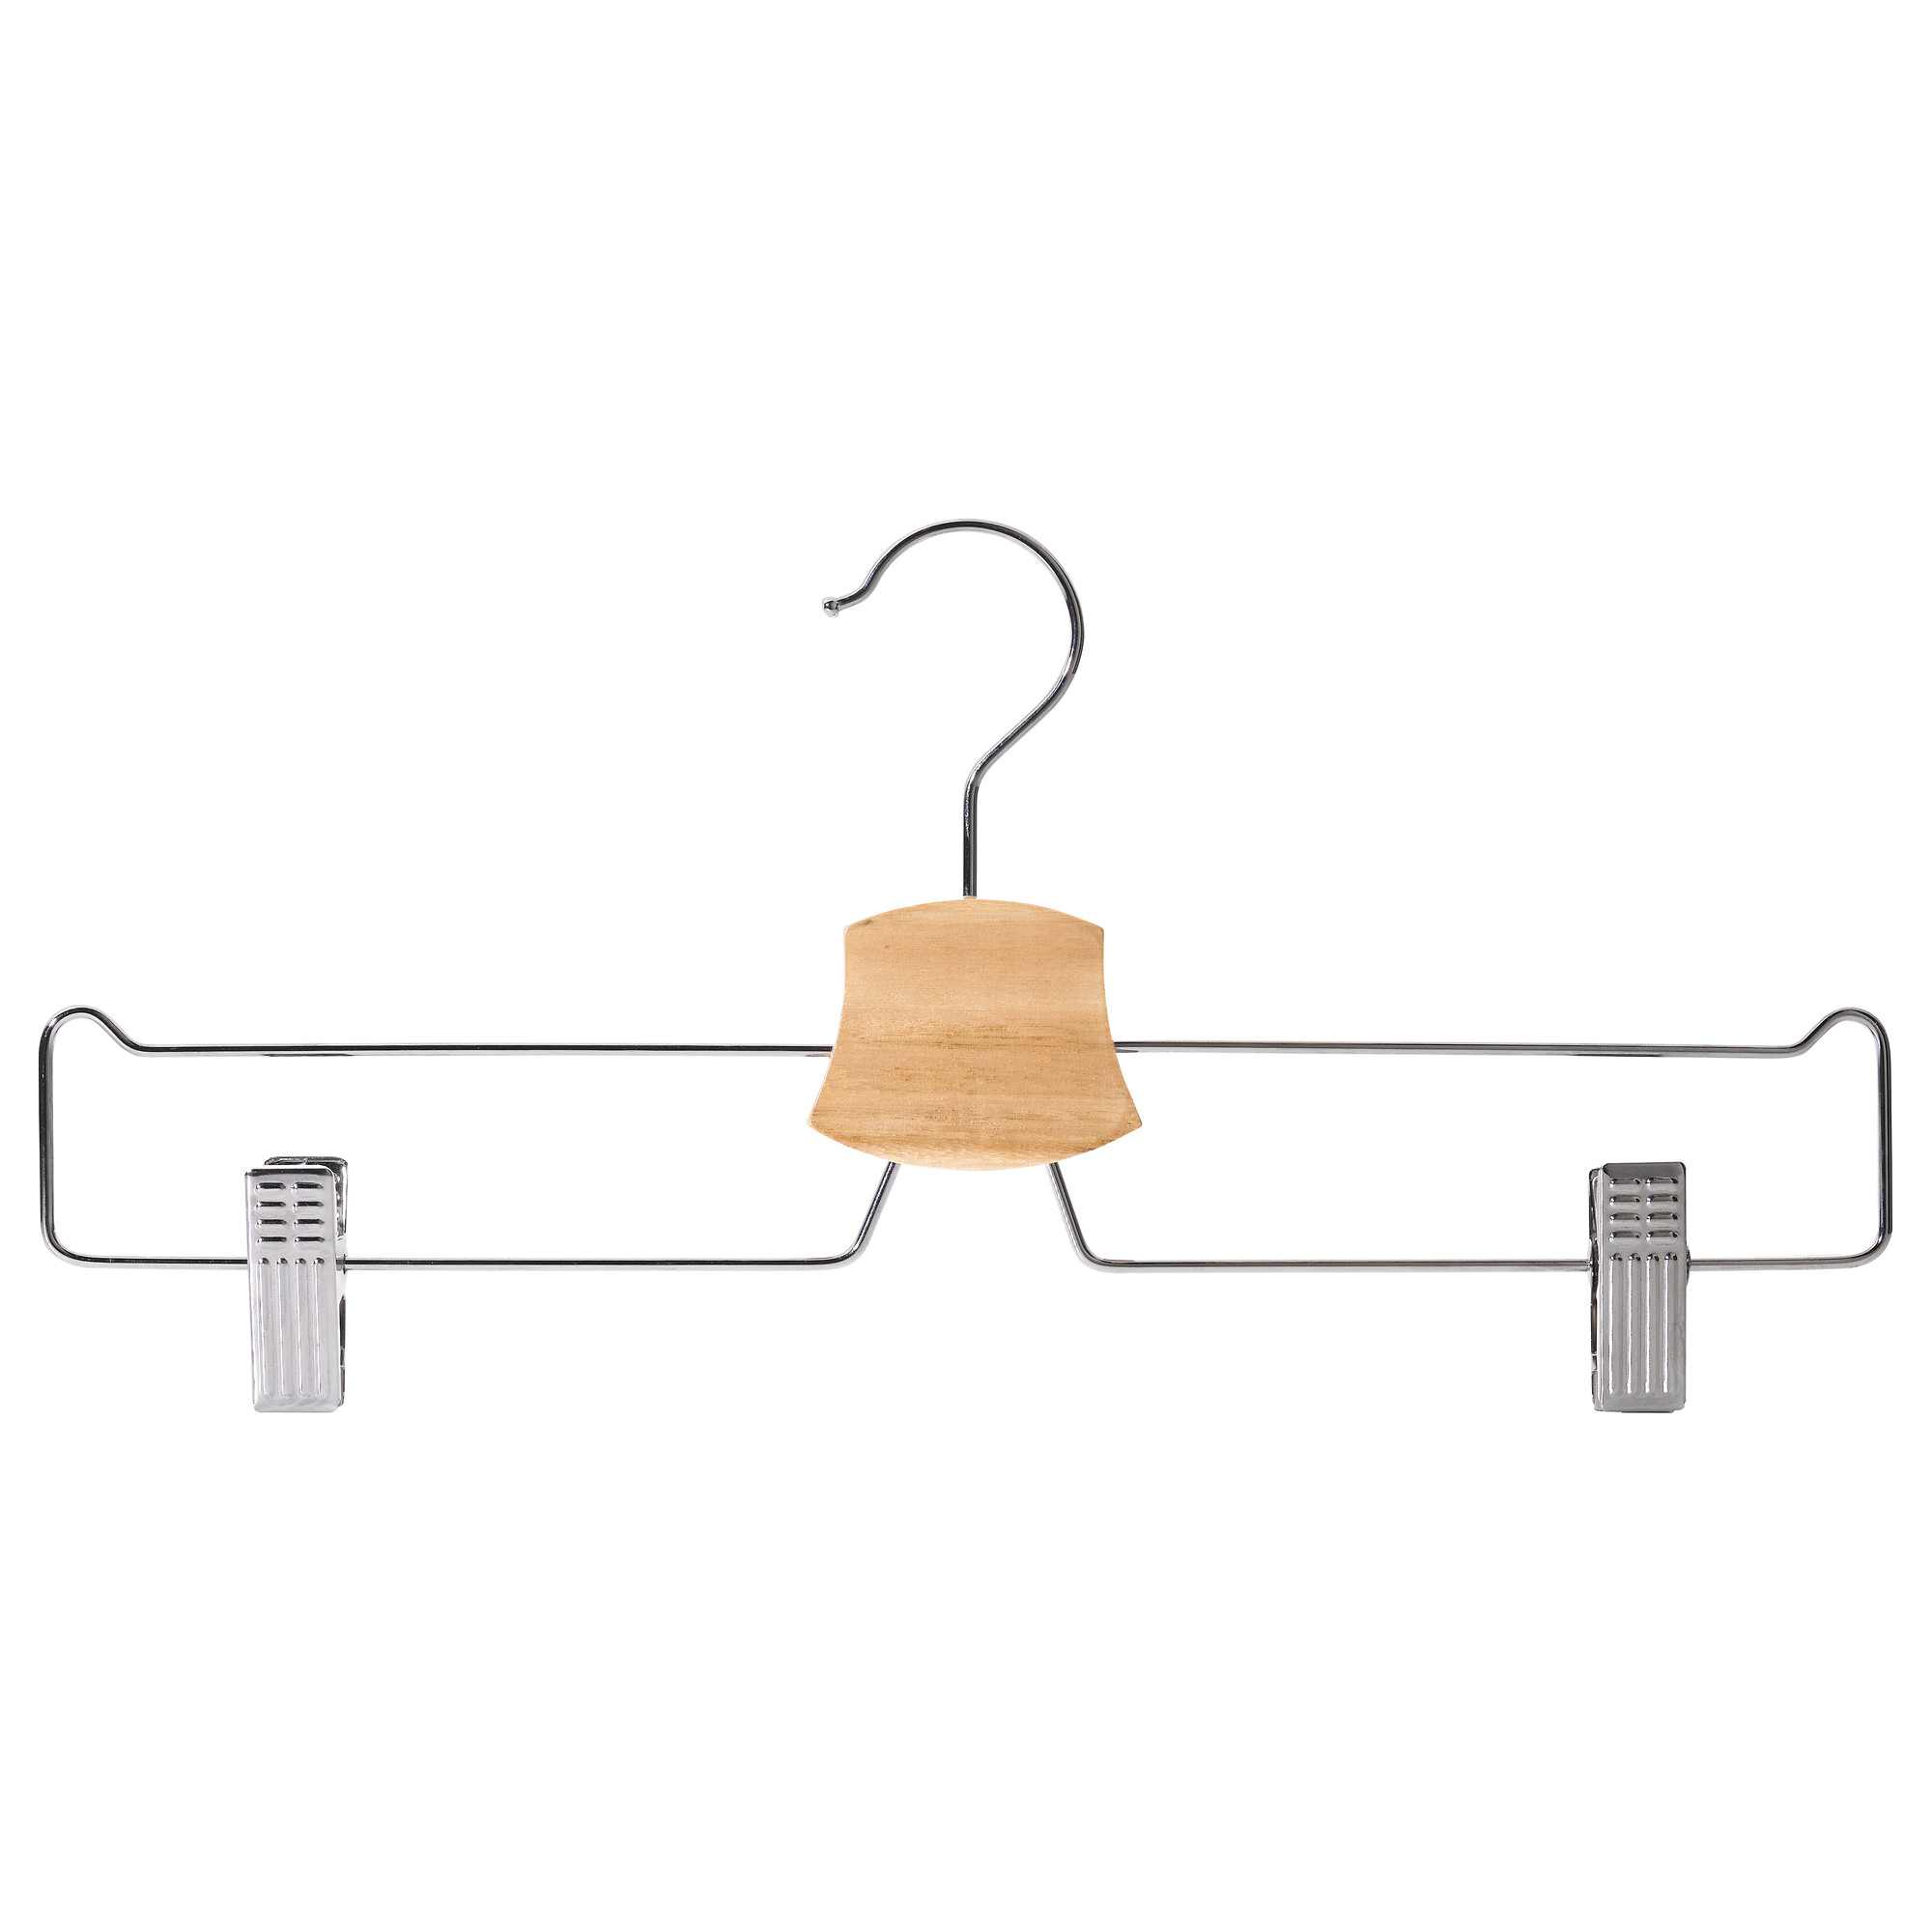 IKEA Bumerang Coat Hanger Dimensions & Drawings